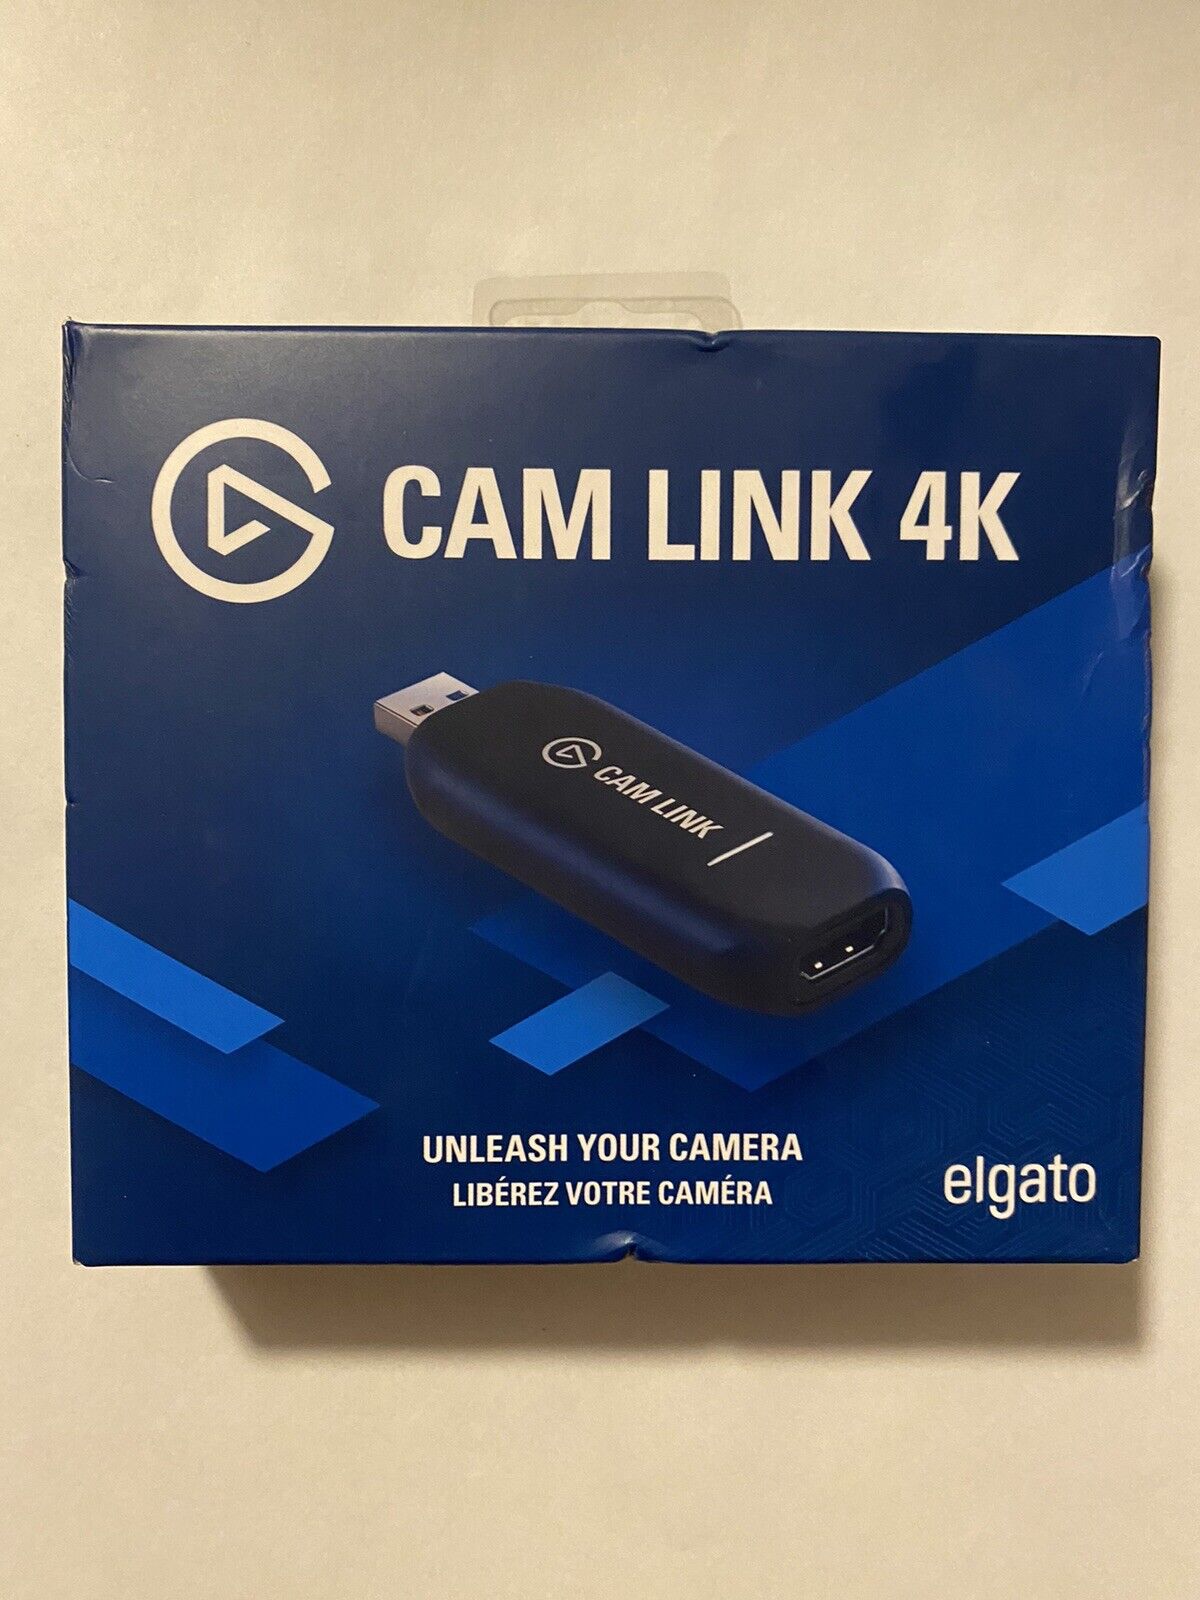 Cam Link 4K Elgato 10GAM9901 Video Capture Device (Brand New Factory Sealed)****